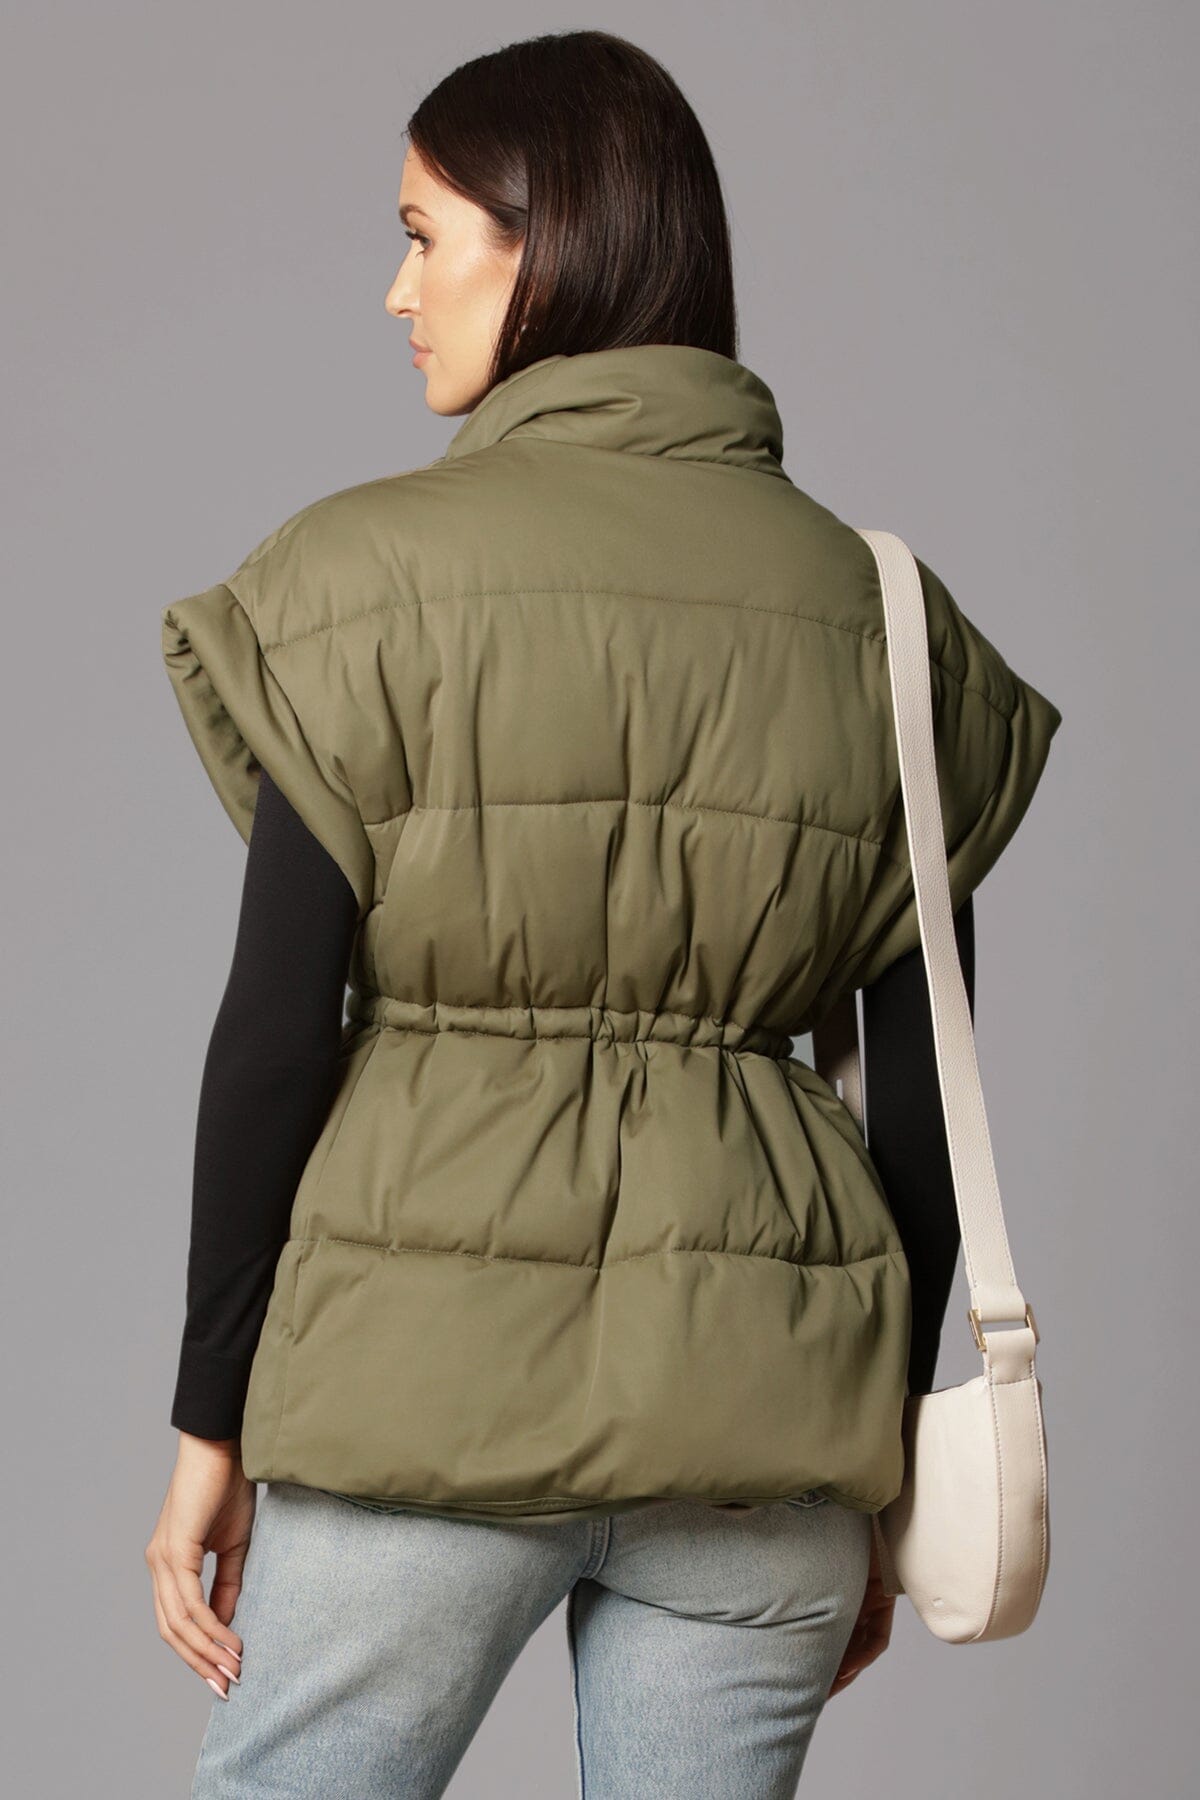 olive green thermal puff cinch waist zip front puffer vest outerwear- women's figure flattering designer fashion warm vests